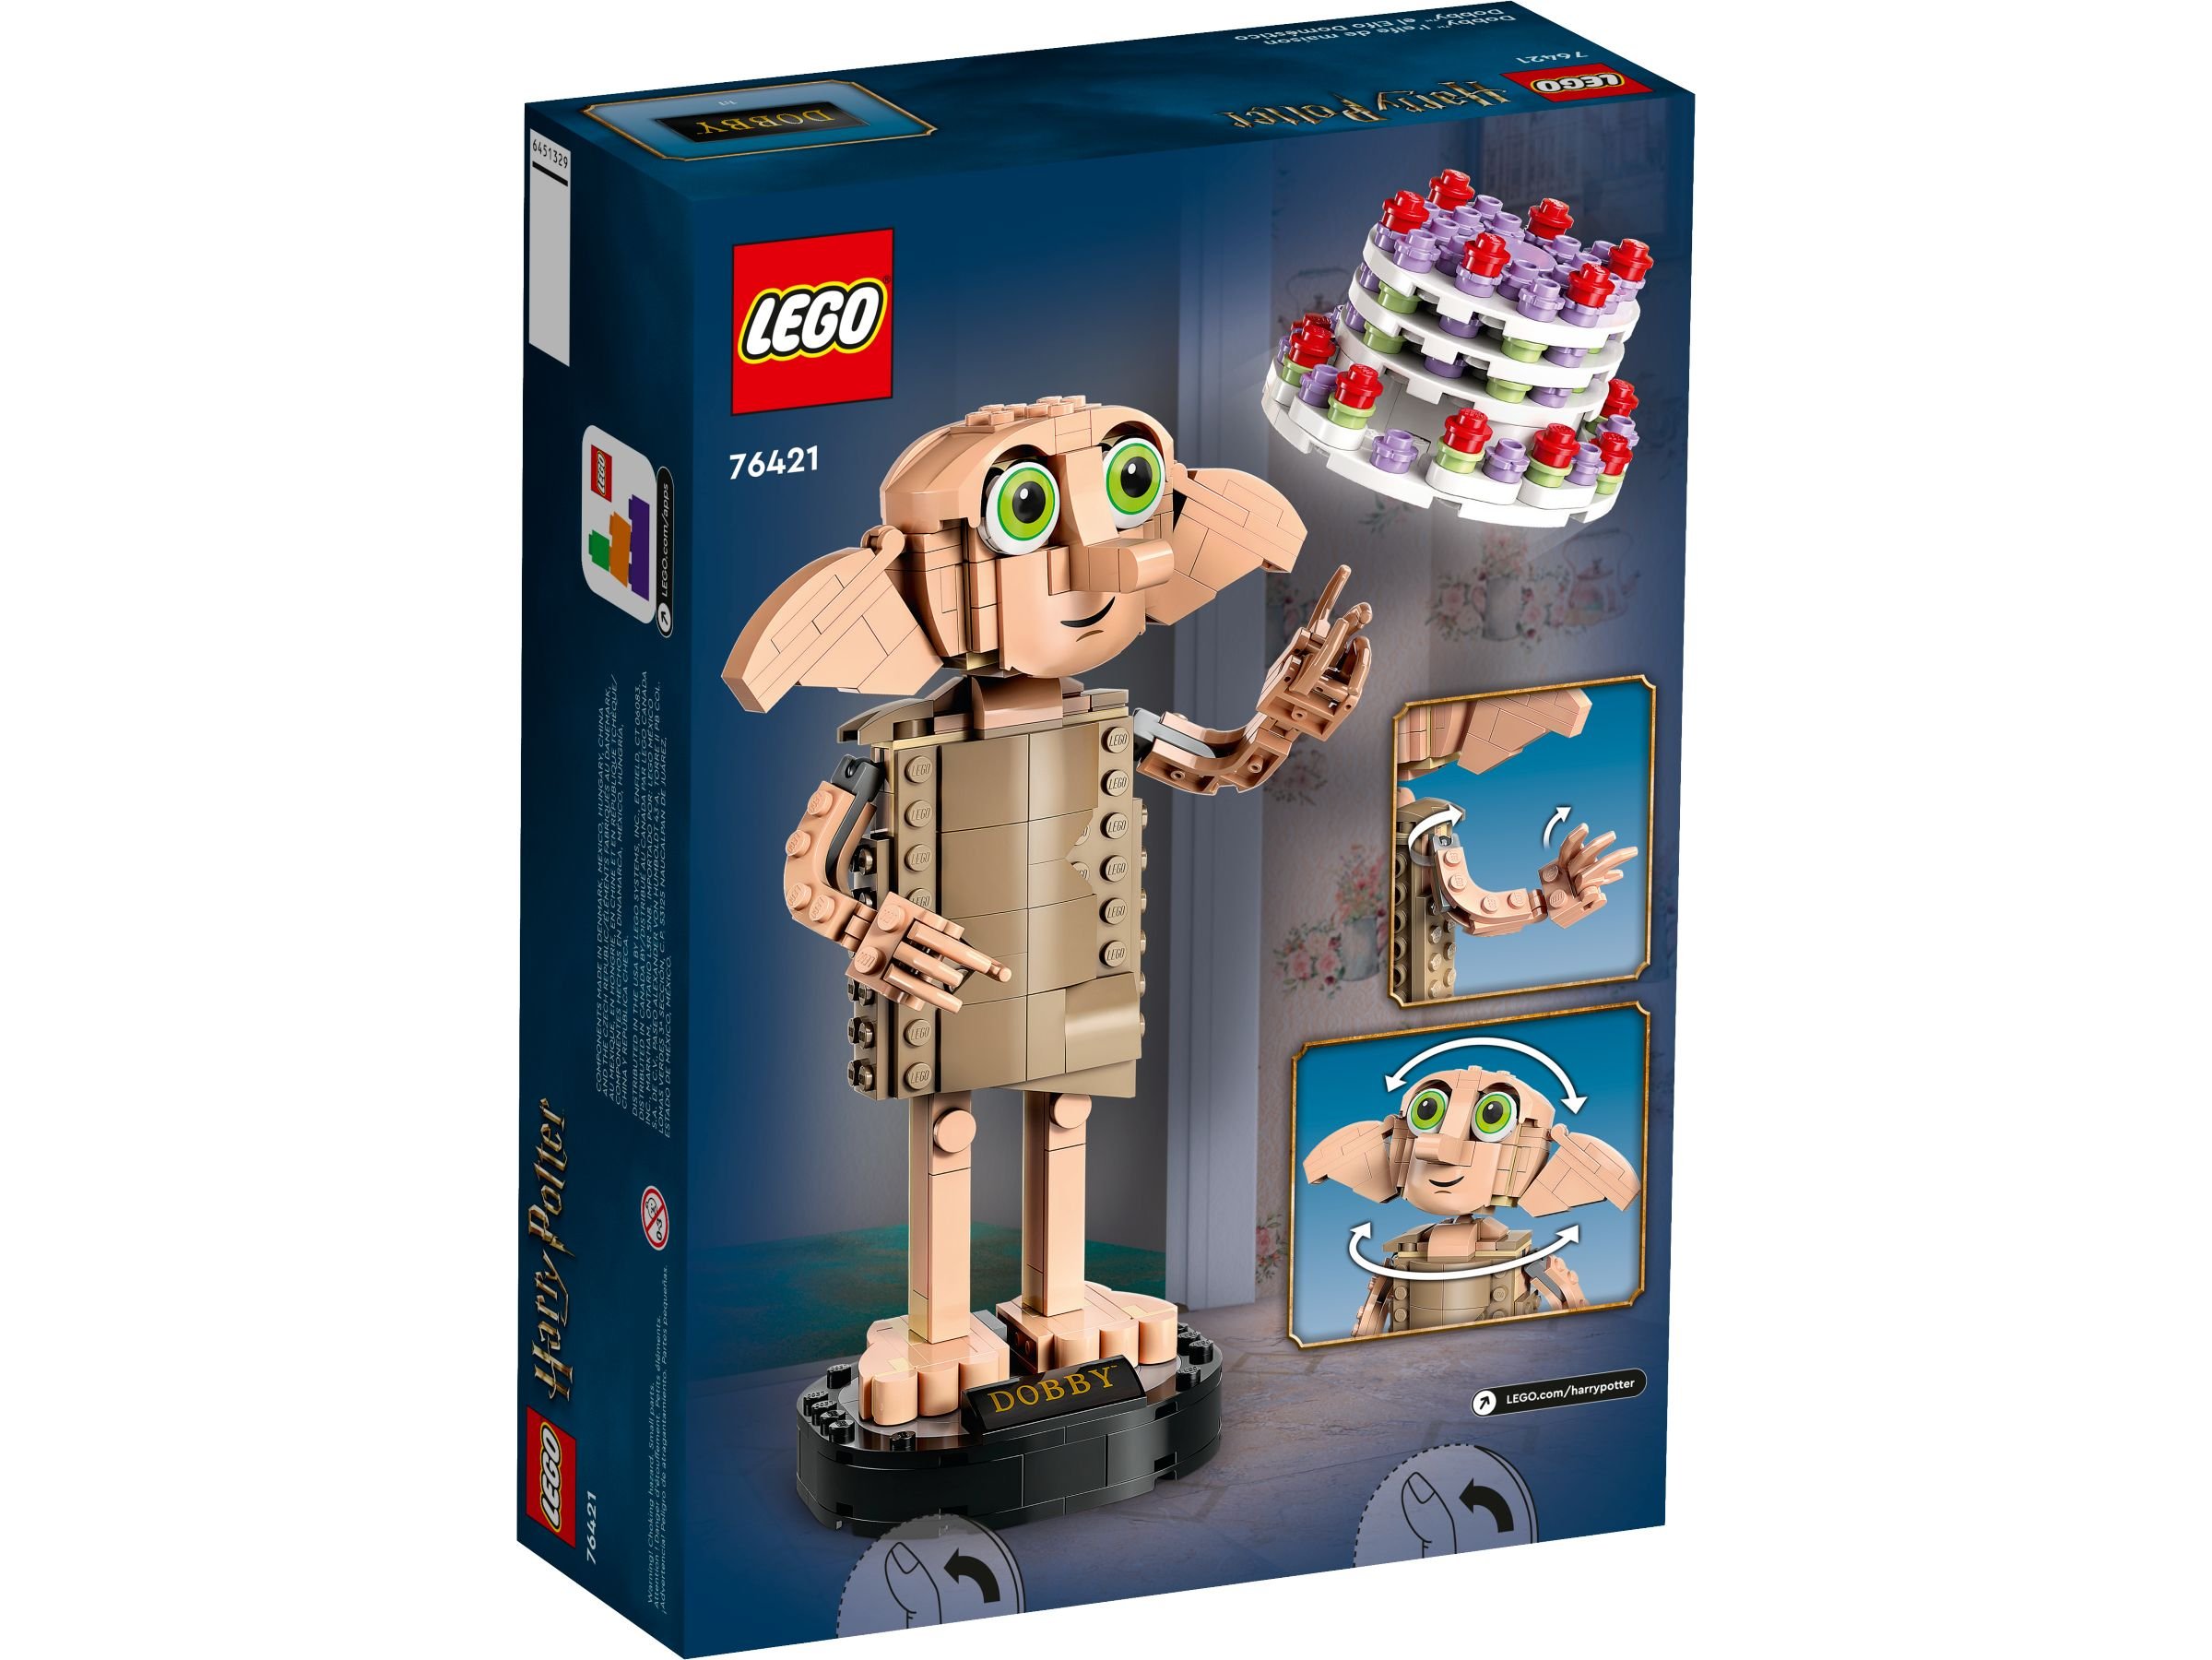 LEGO Harry Potter 76421 Dobby™ der Hauself LEGO_76421_alt5.jpg